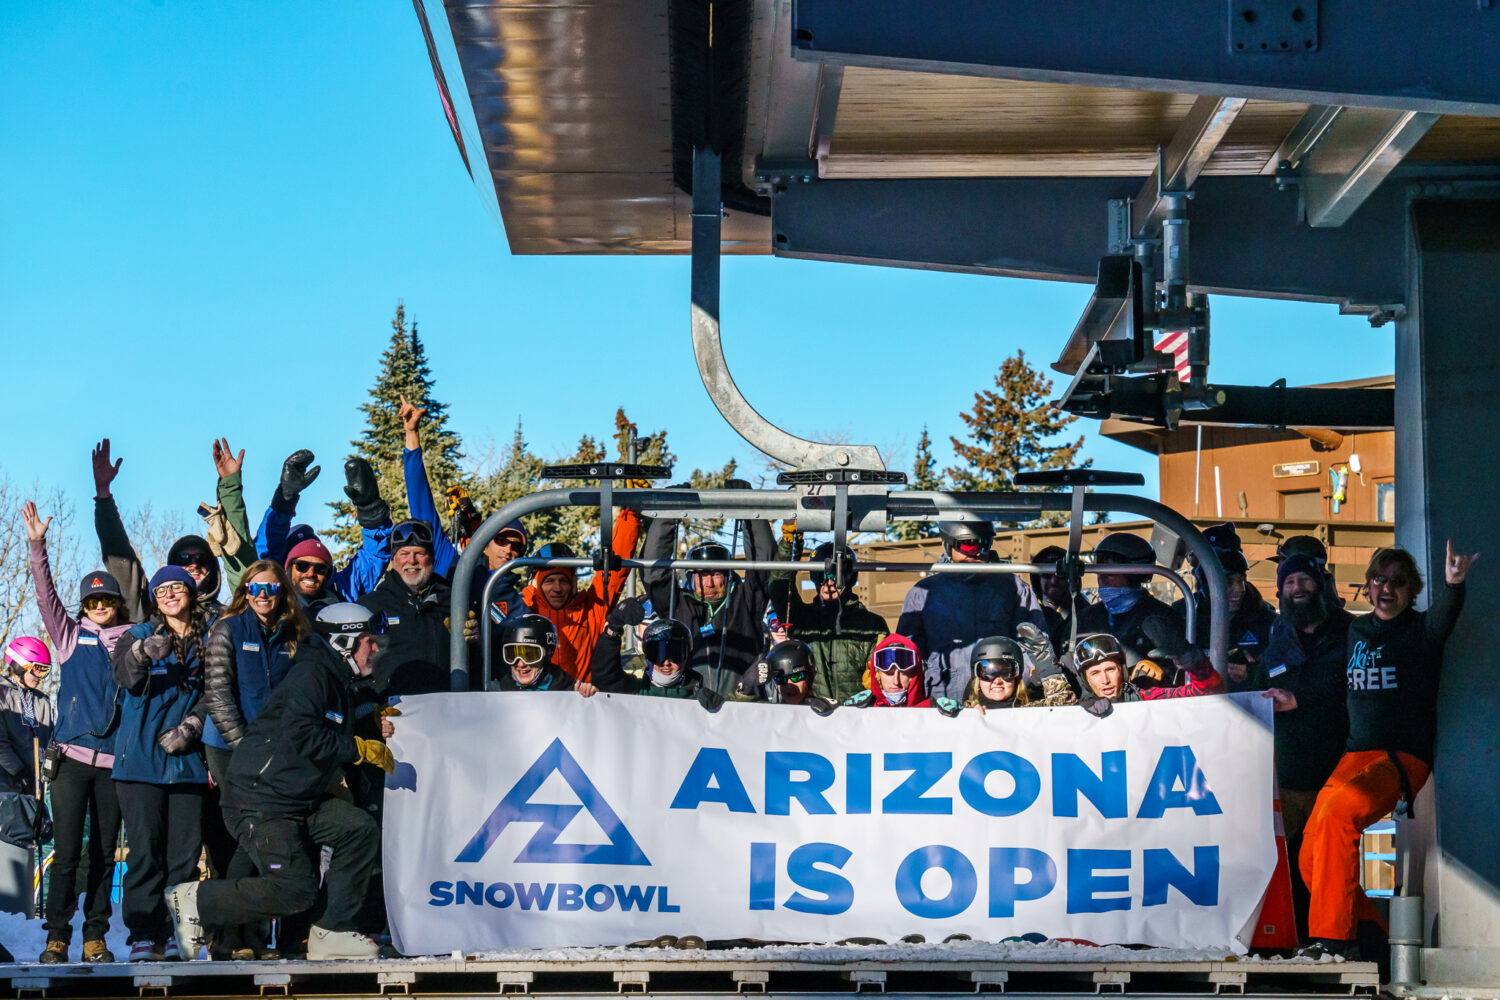 Opening day at Arizona Snowbowl. 22/23 winter season.